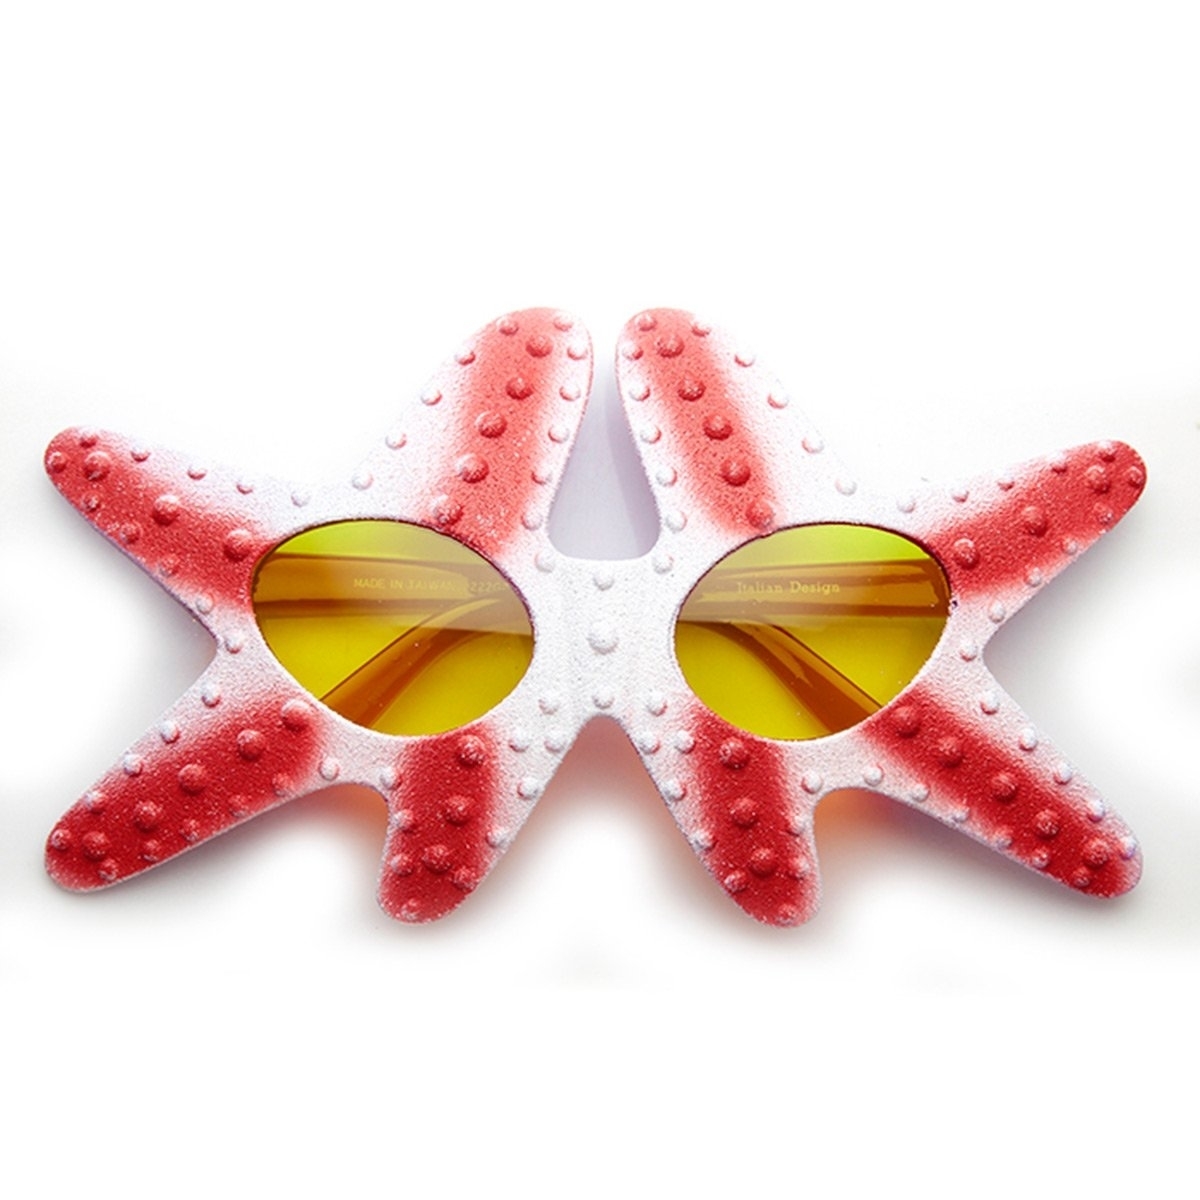 Starfish Patrick Star Under The Sea Novelty Party Costume Sunglasses - Black-White Smoke